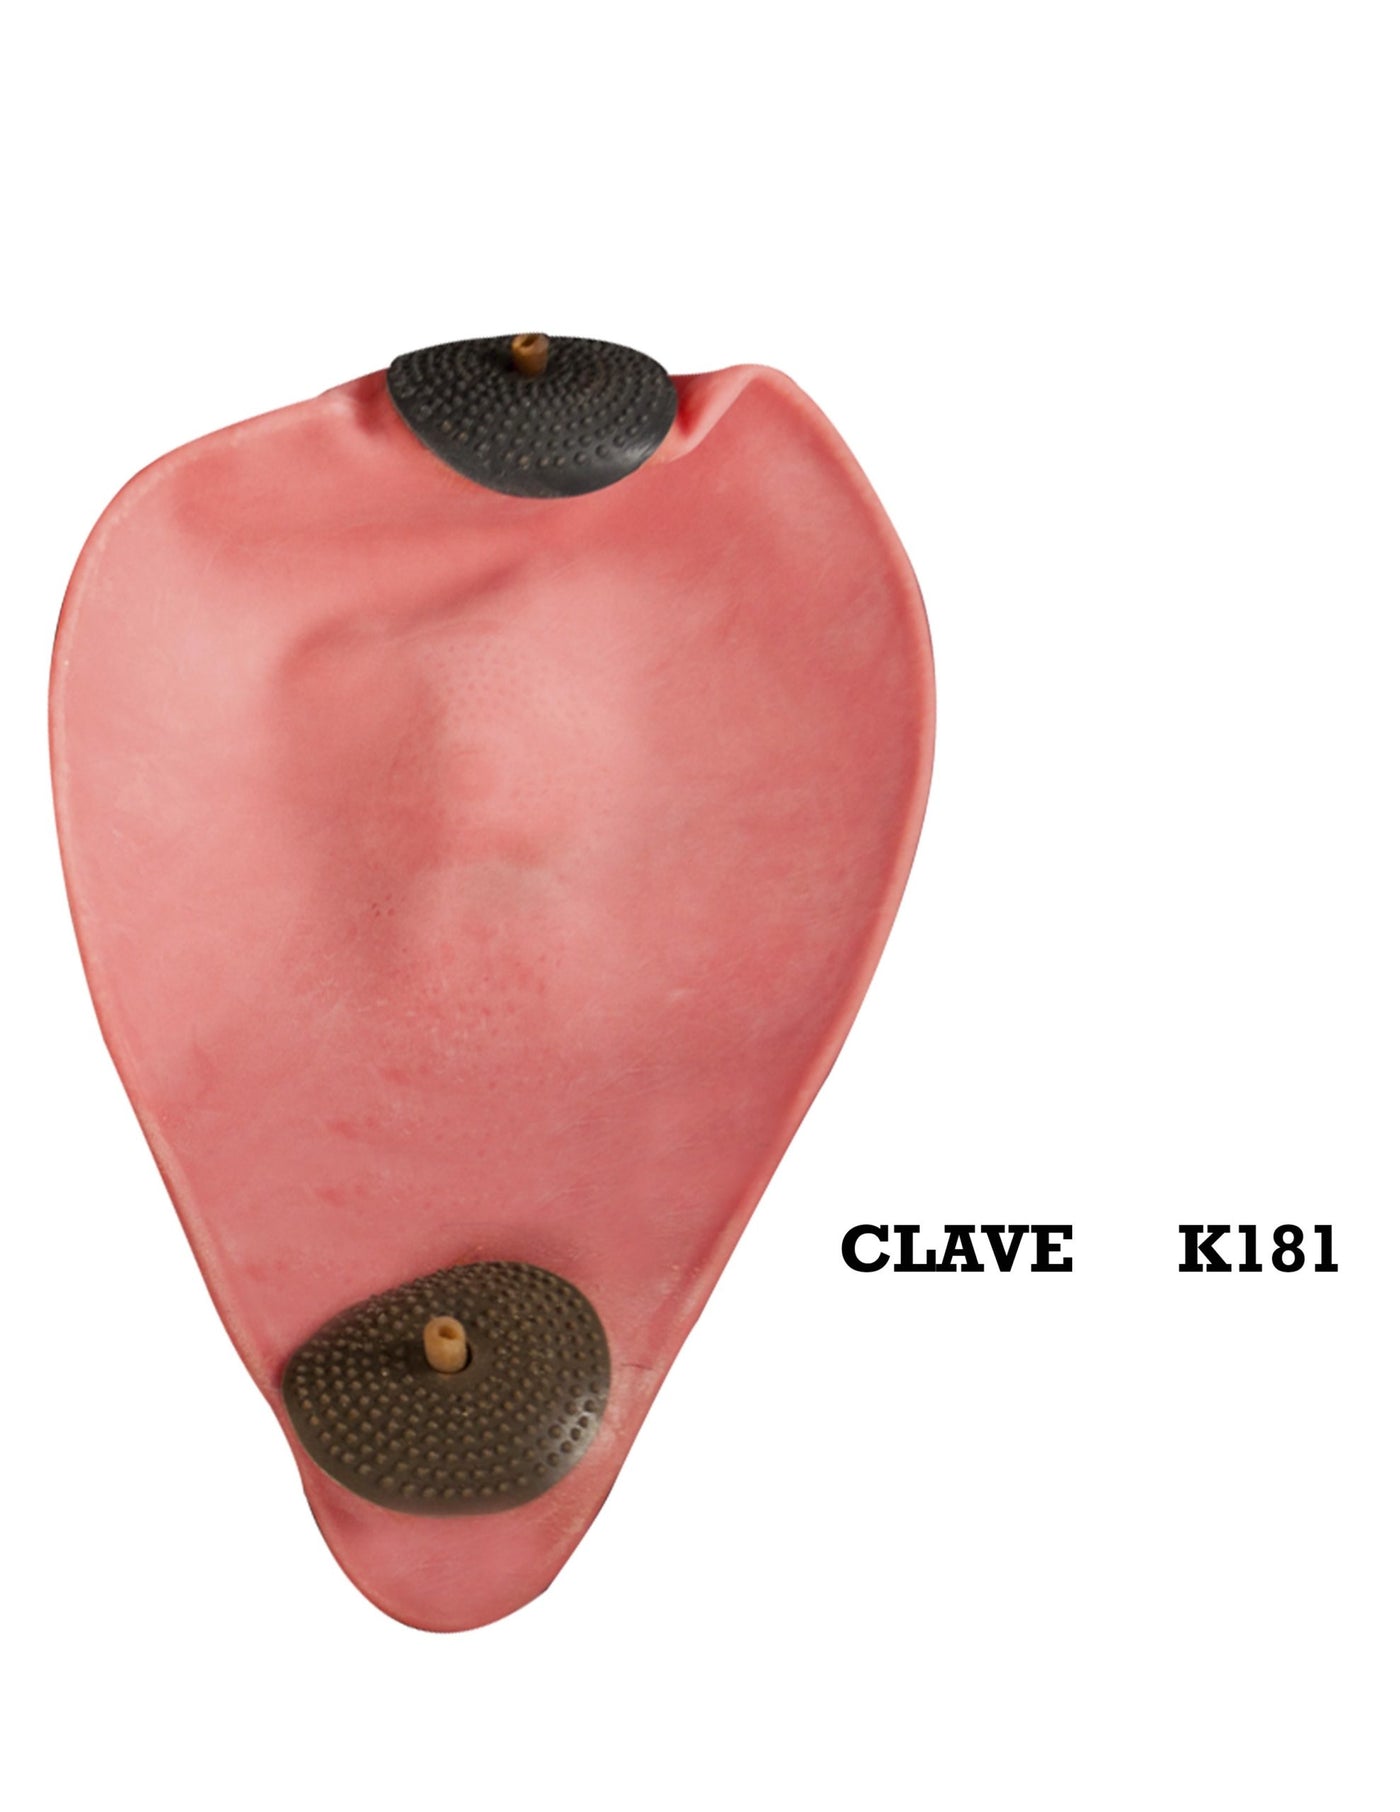 Cleto Reyes Speedball bladder – Two valves